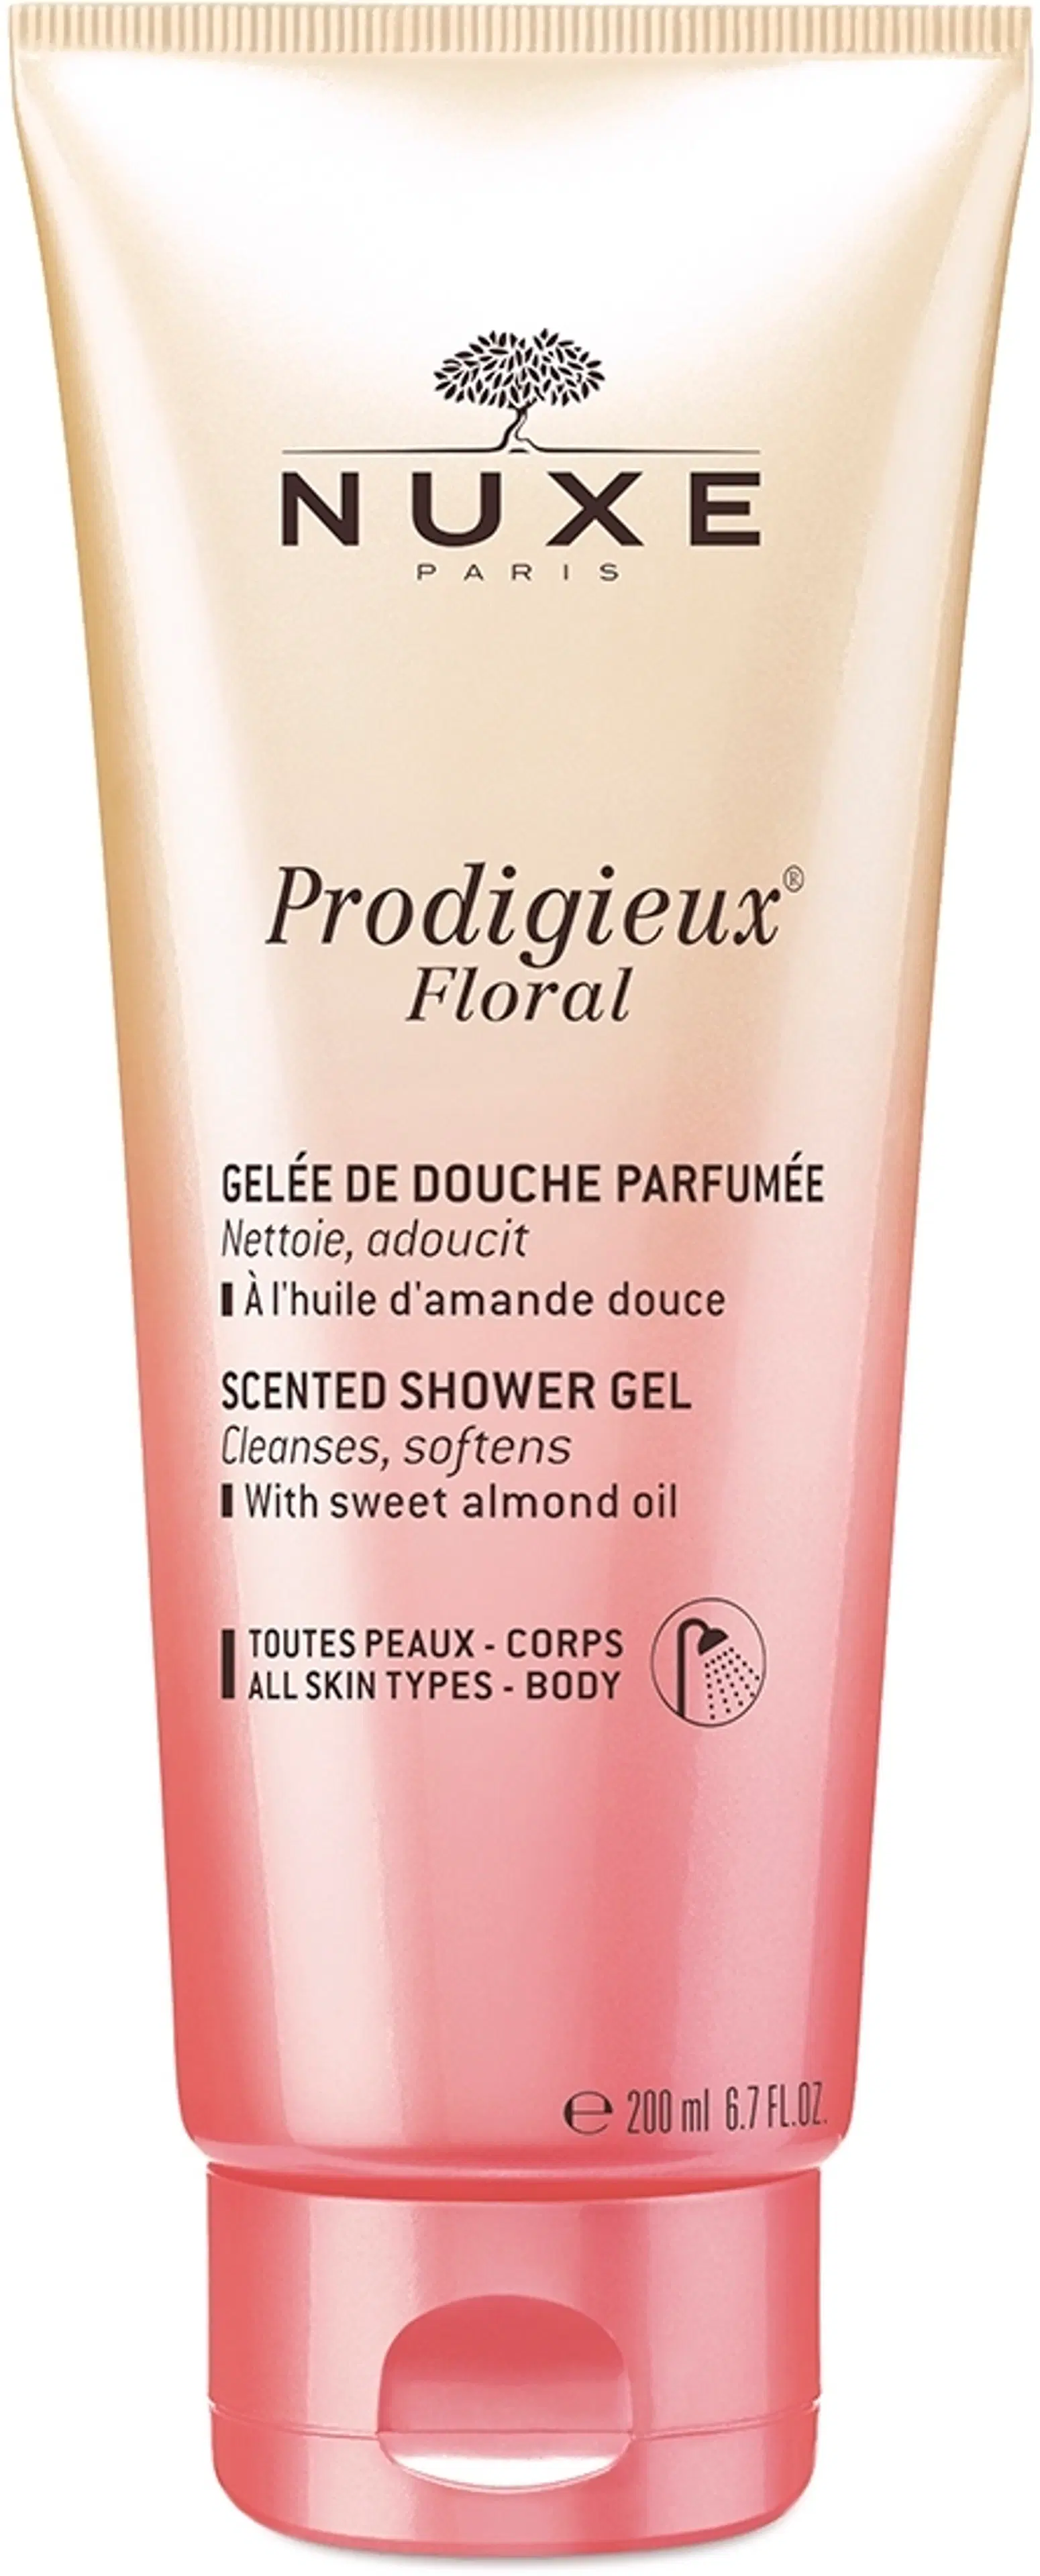 NUXE Prodigieux Floral Scented Shower Gel suihkugeeli 200 ml